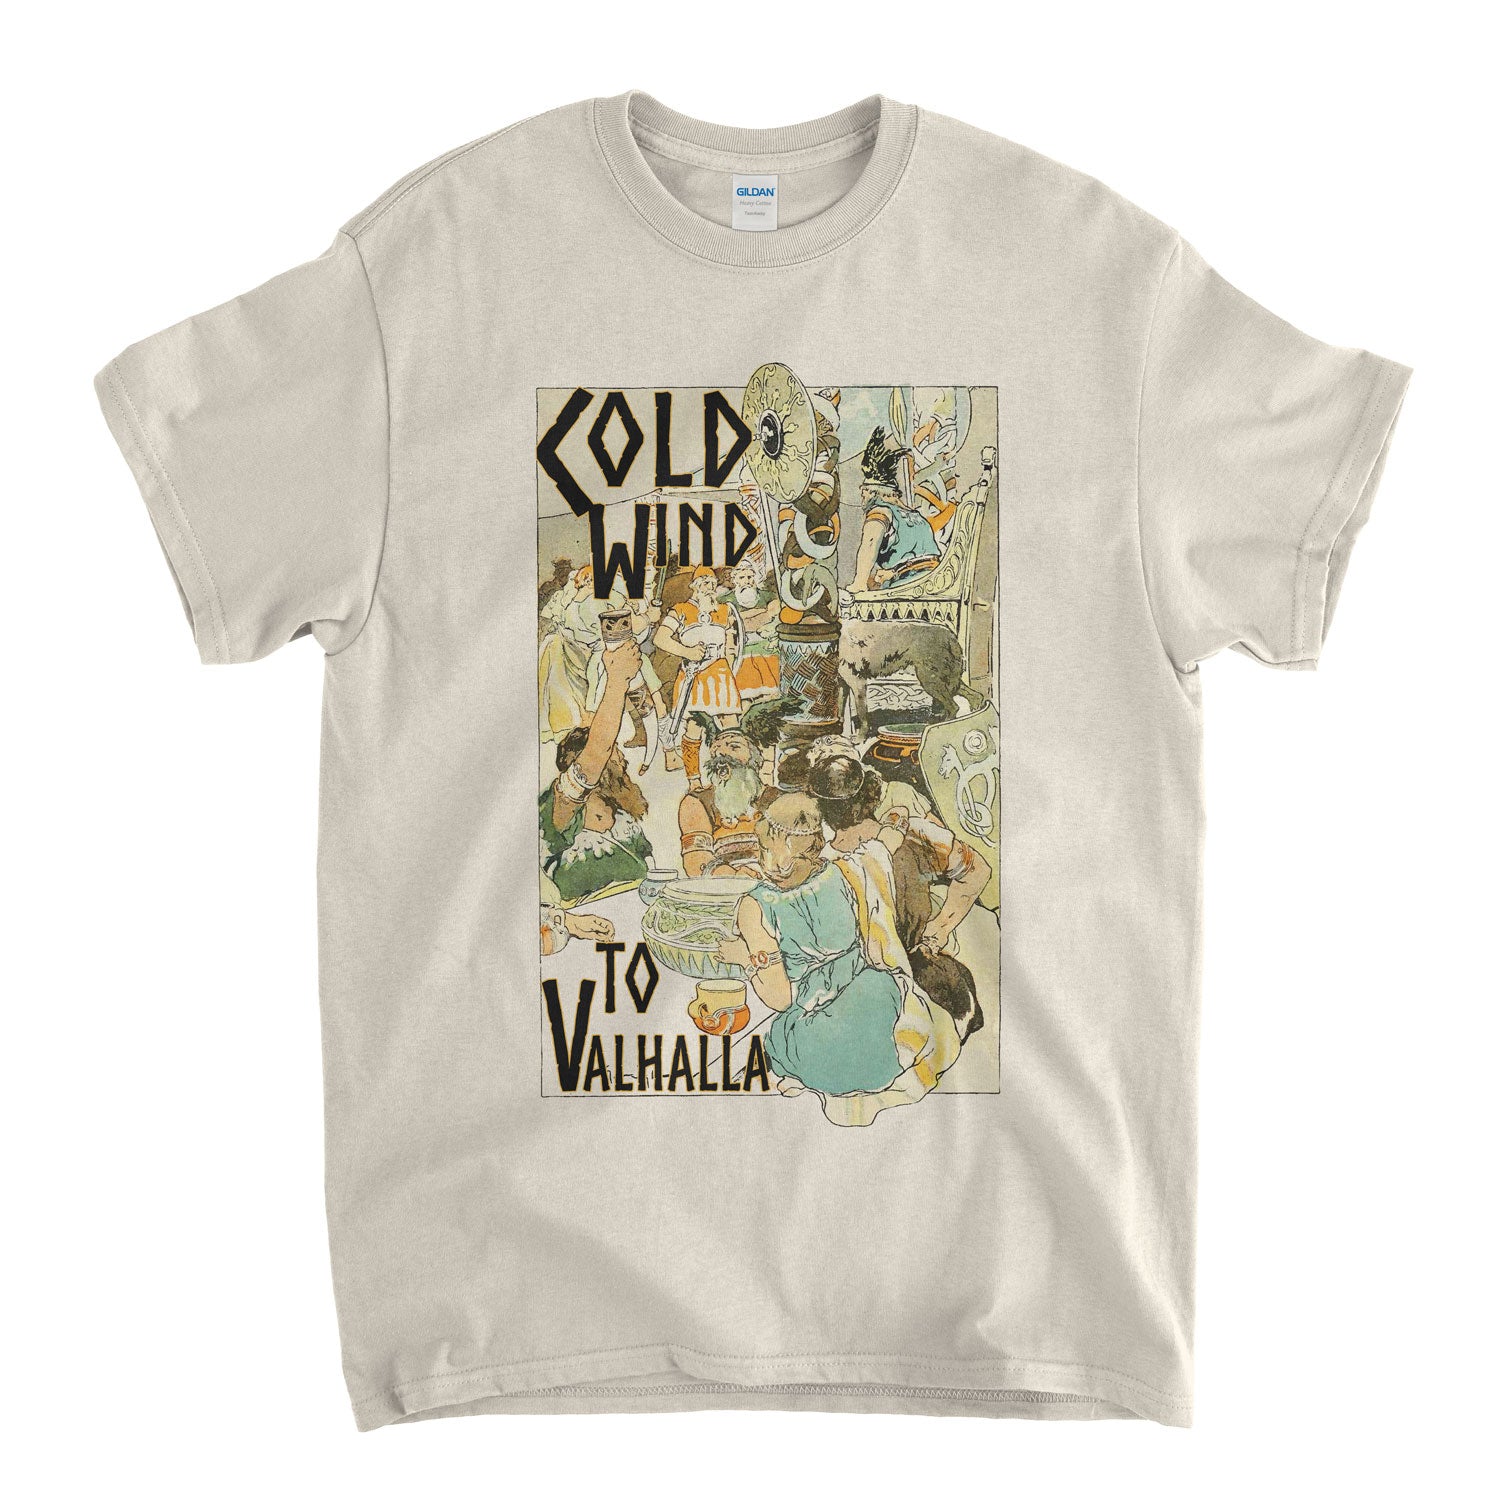 Cold Wind To Valhalla Poster T Shirt An Old Skool Hooligans Prog Original Full colour